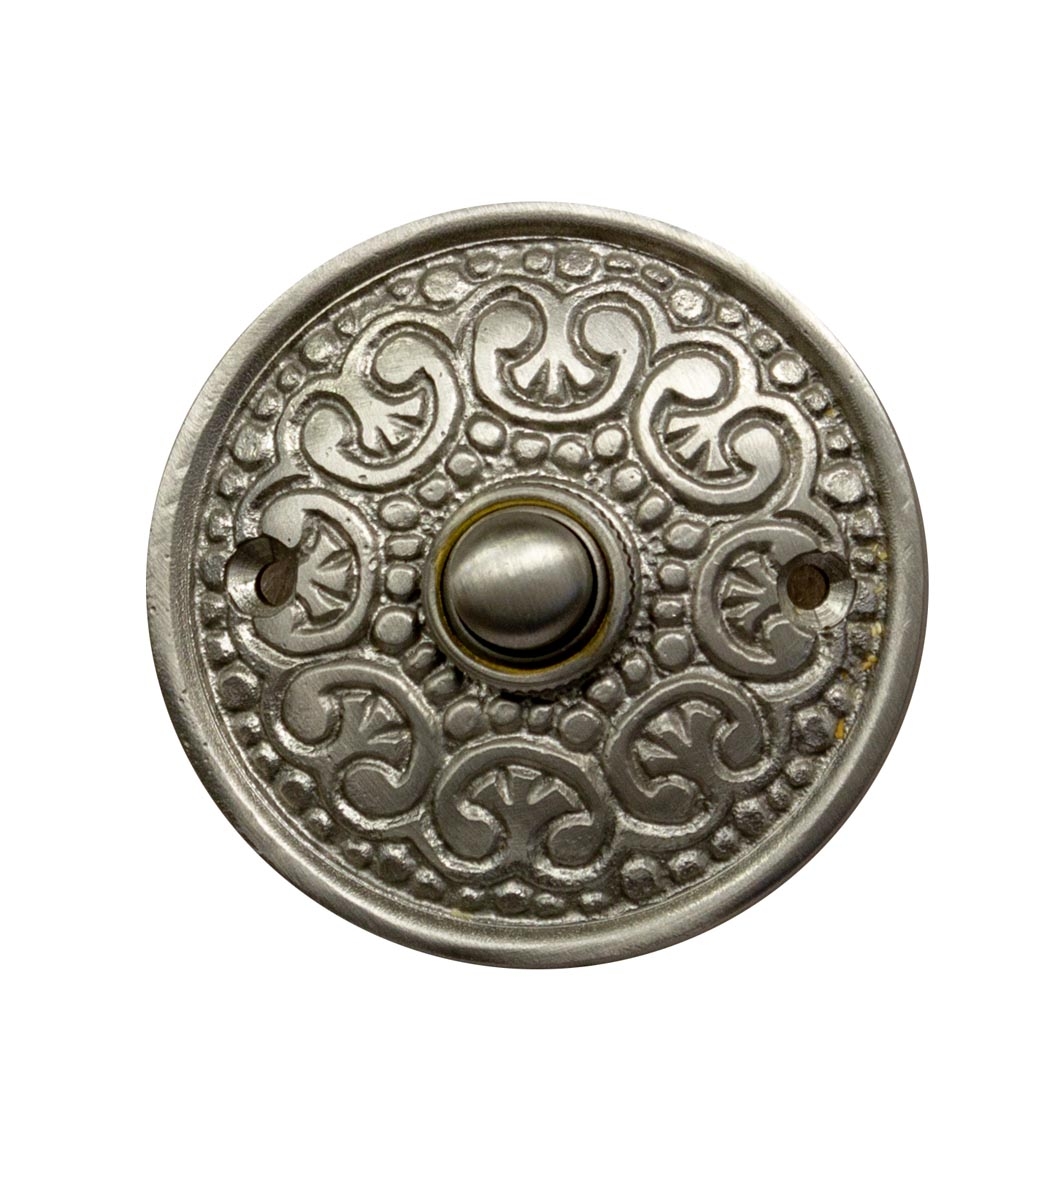 Ornate Satin Nickel Doorbell Button